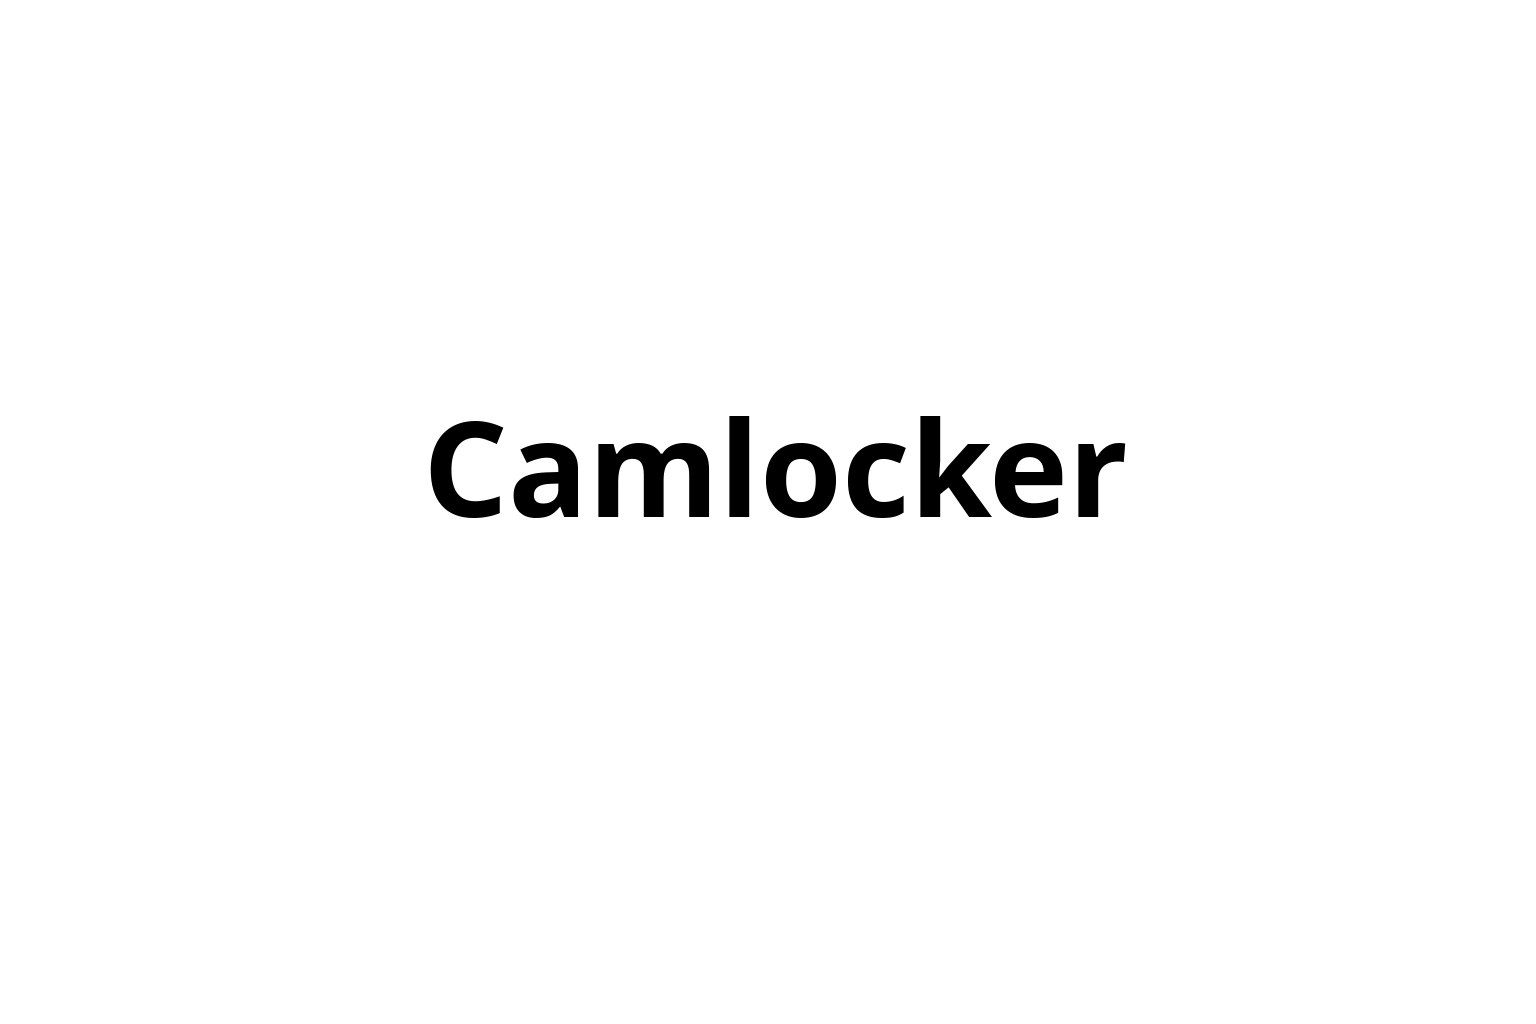 CamLocker